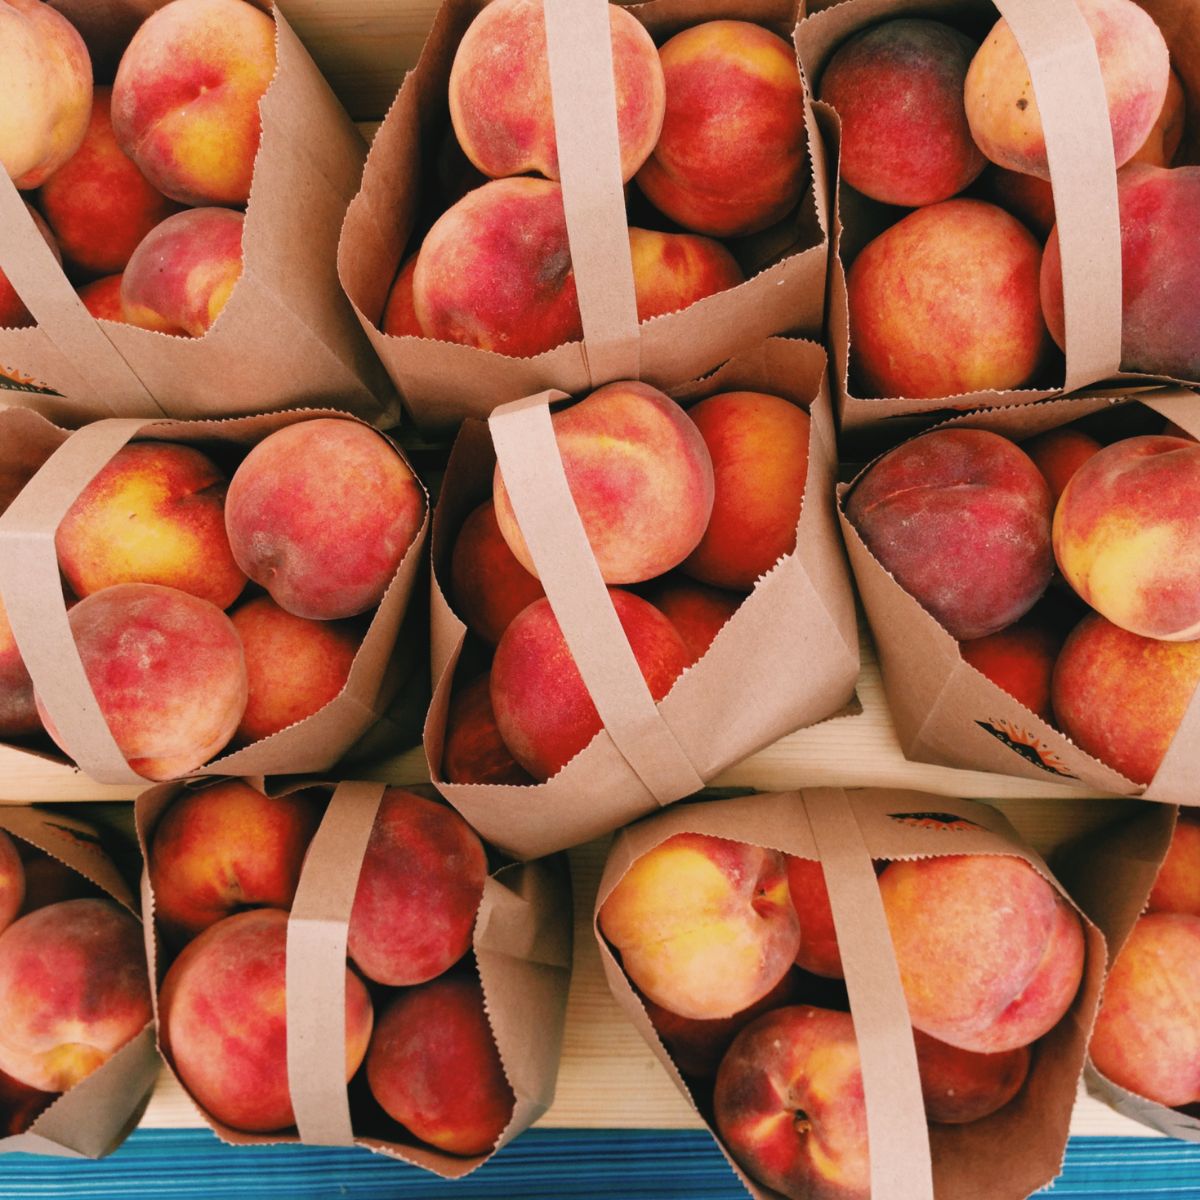 Bags of fresh peaches at a farmer's market stand.